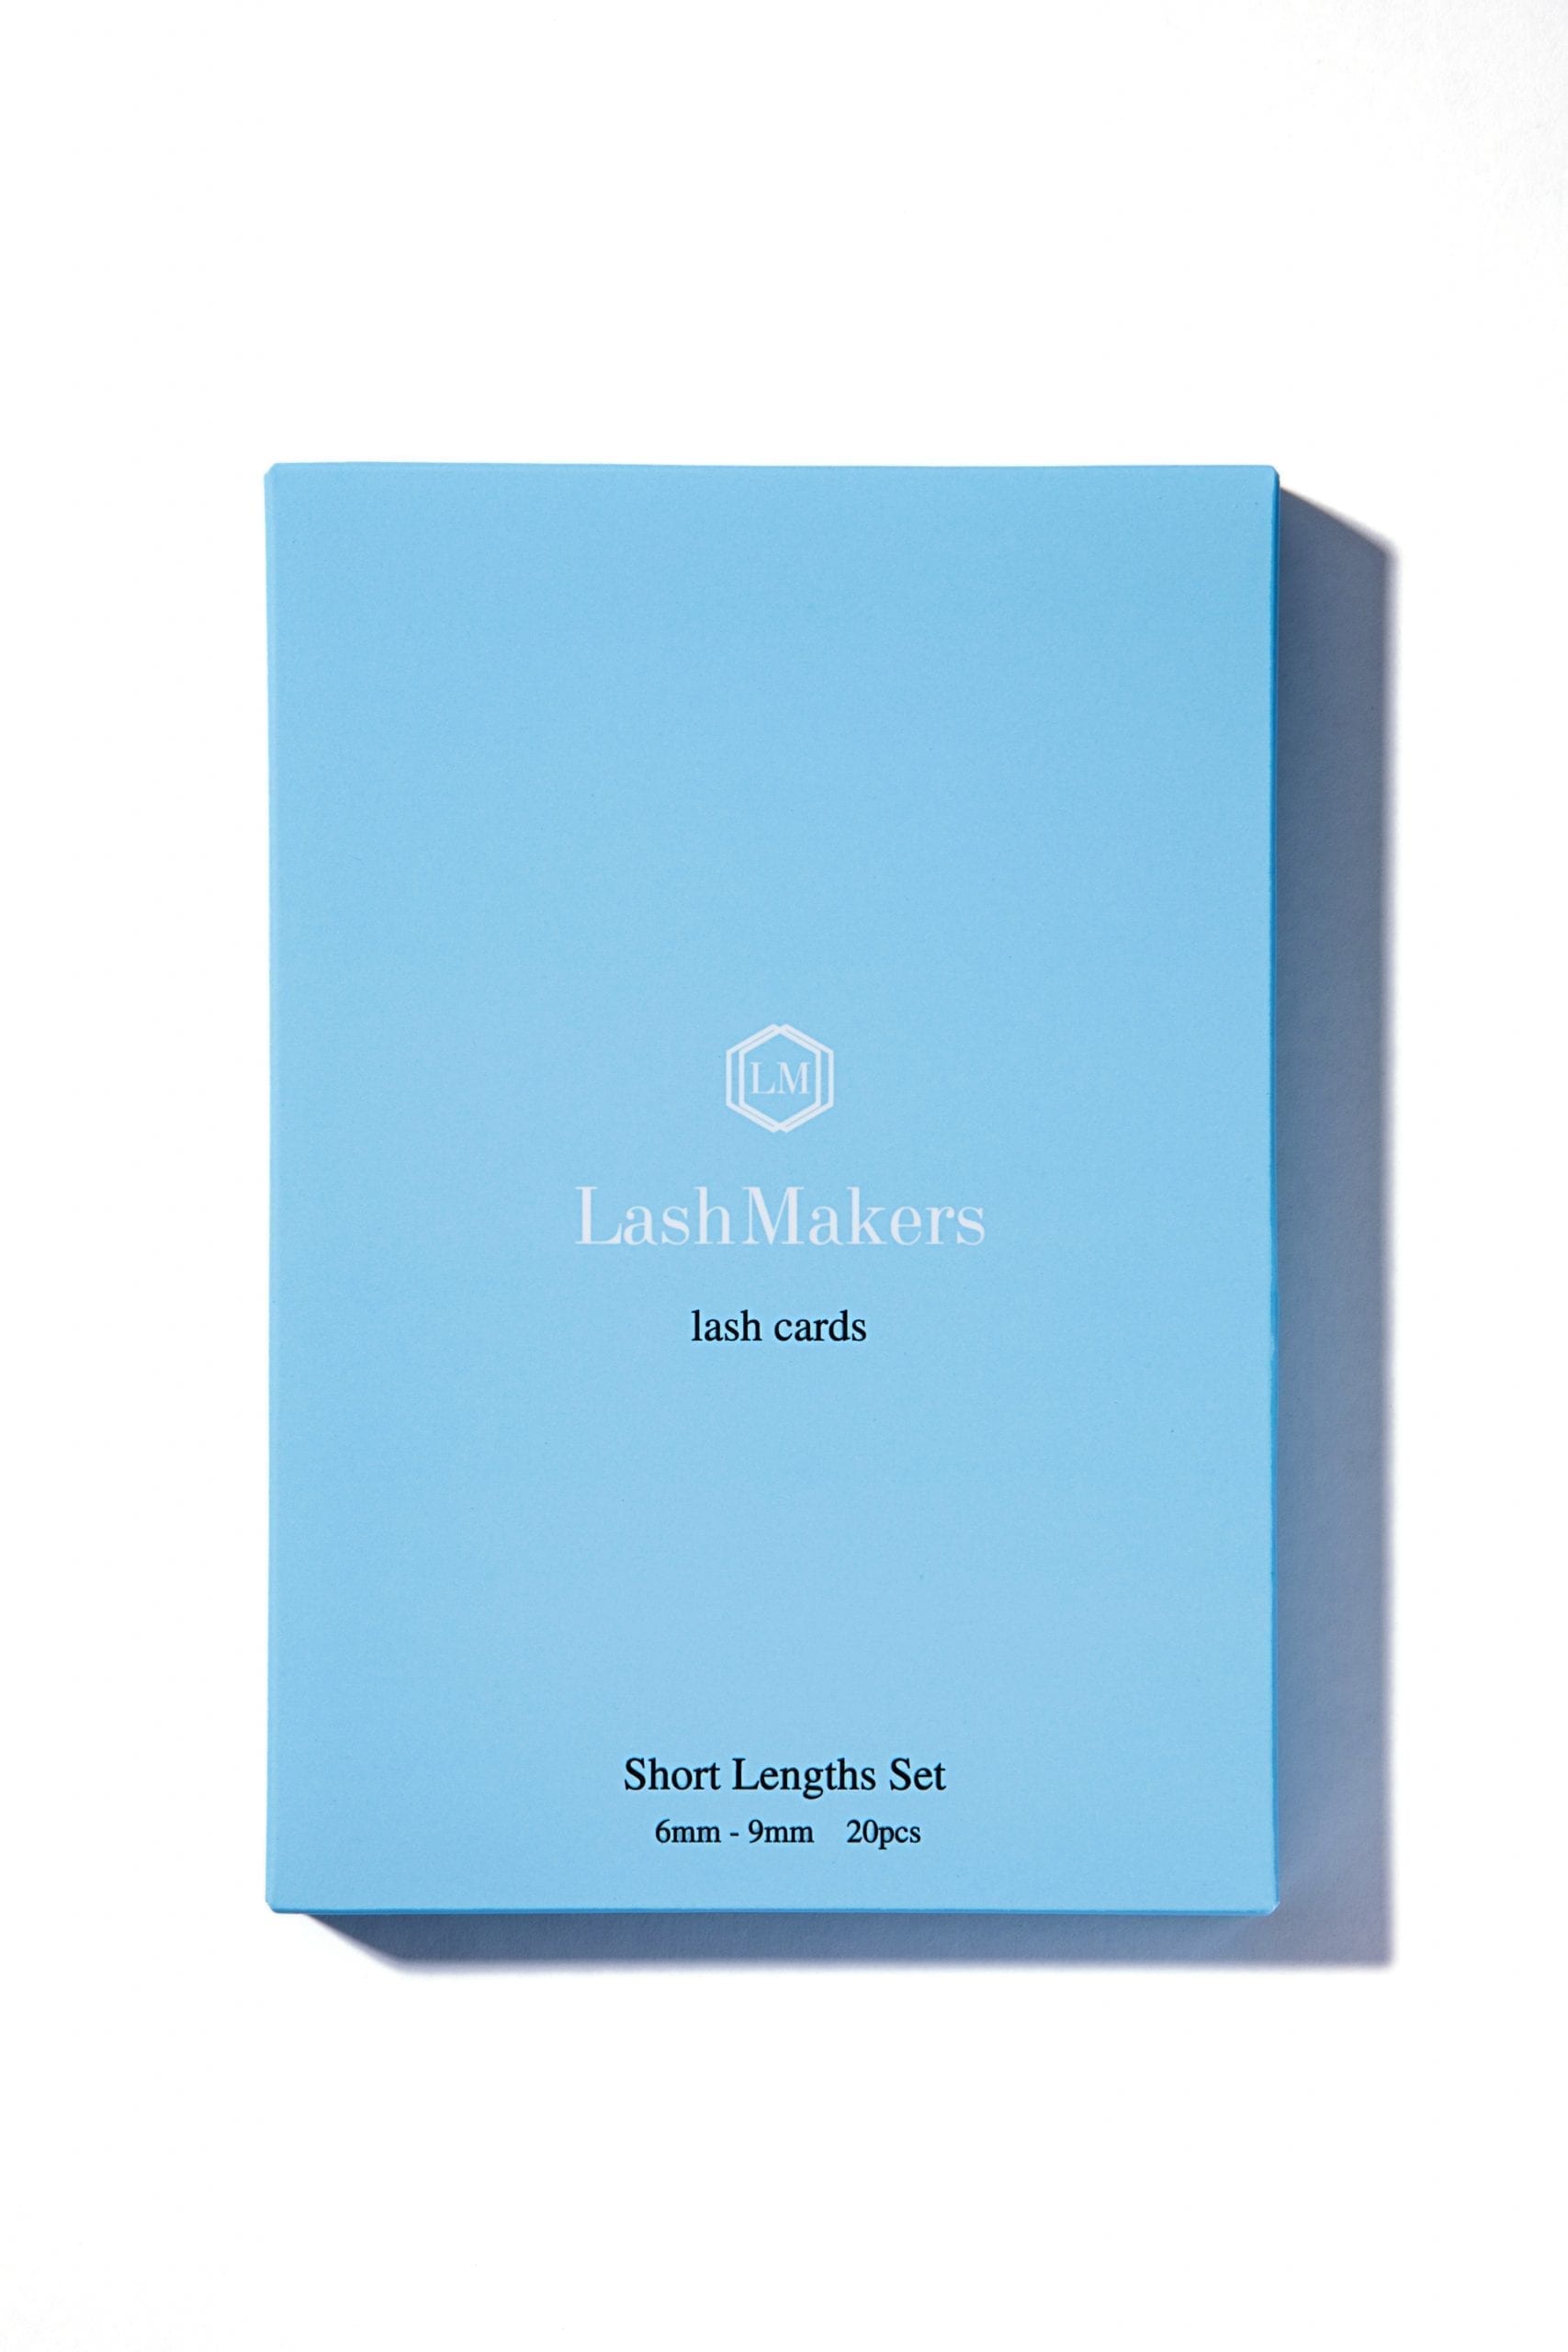 LashMakers - Buy Lash Cards